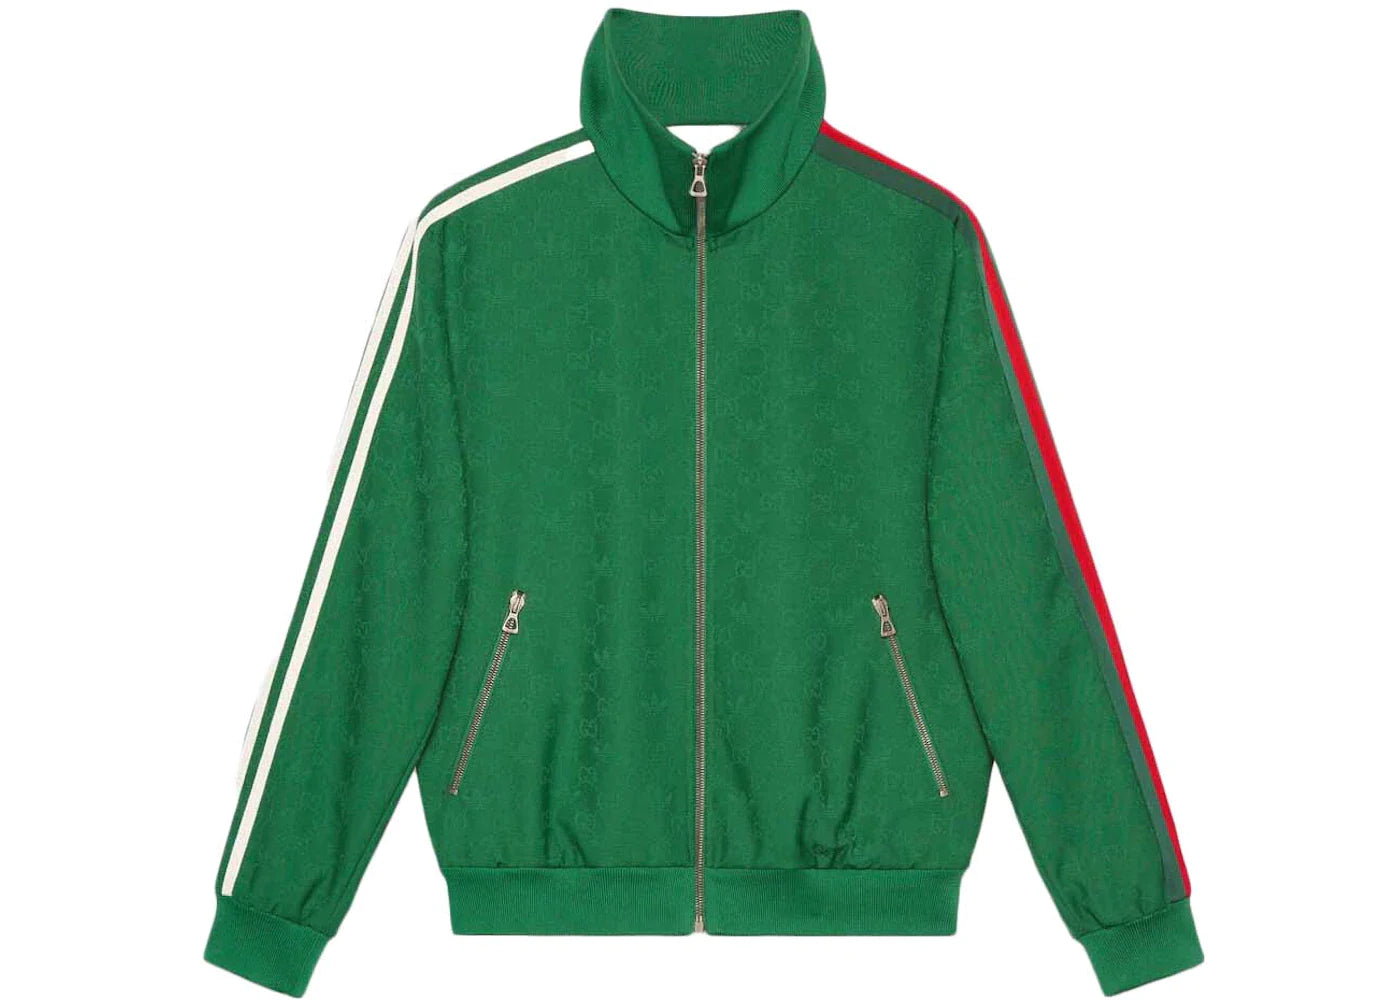 Gucci x adidas GG Trefoil Jacquard Jacket Green